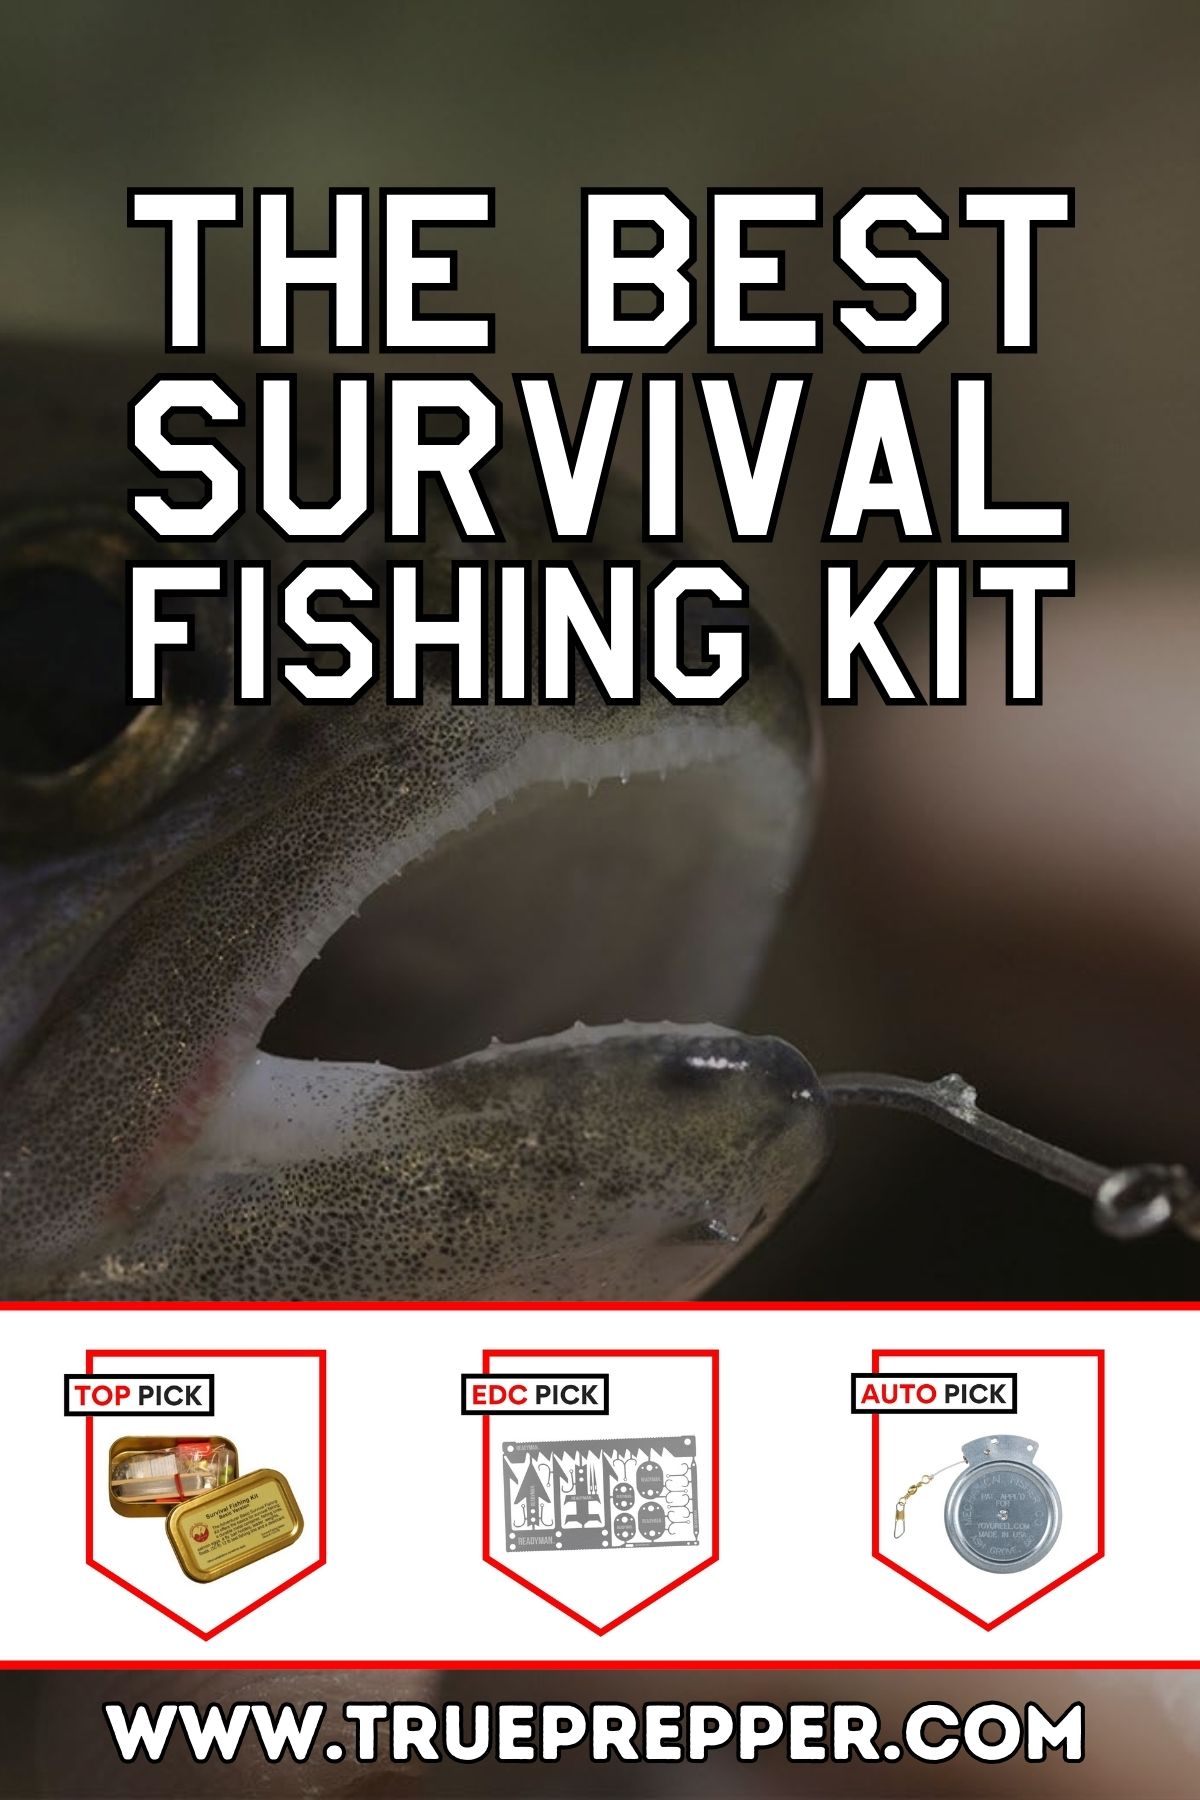 The Best Survival Fishing Kit